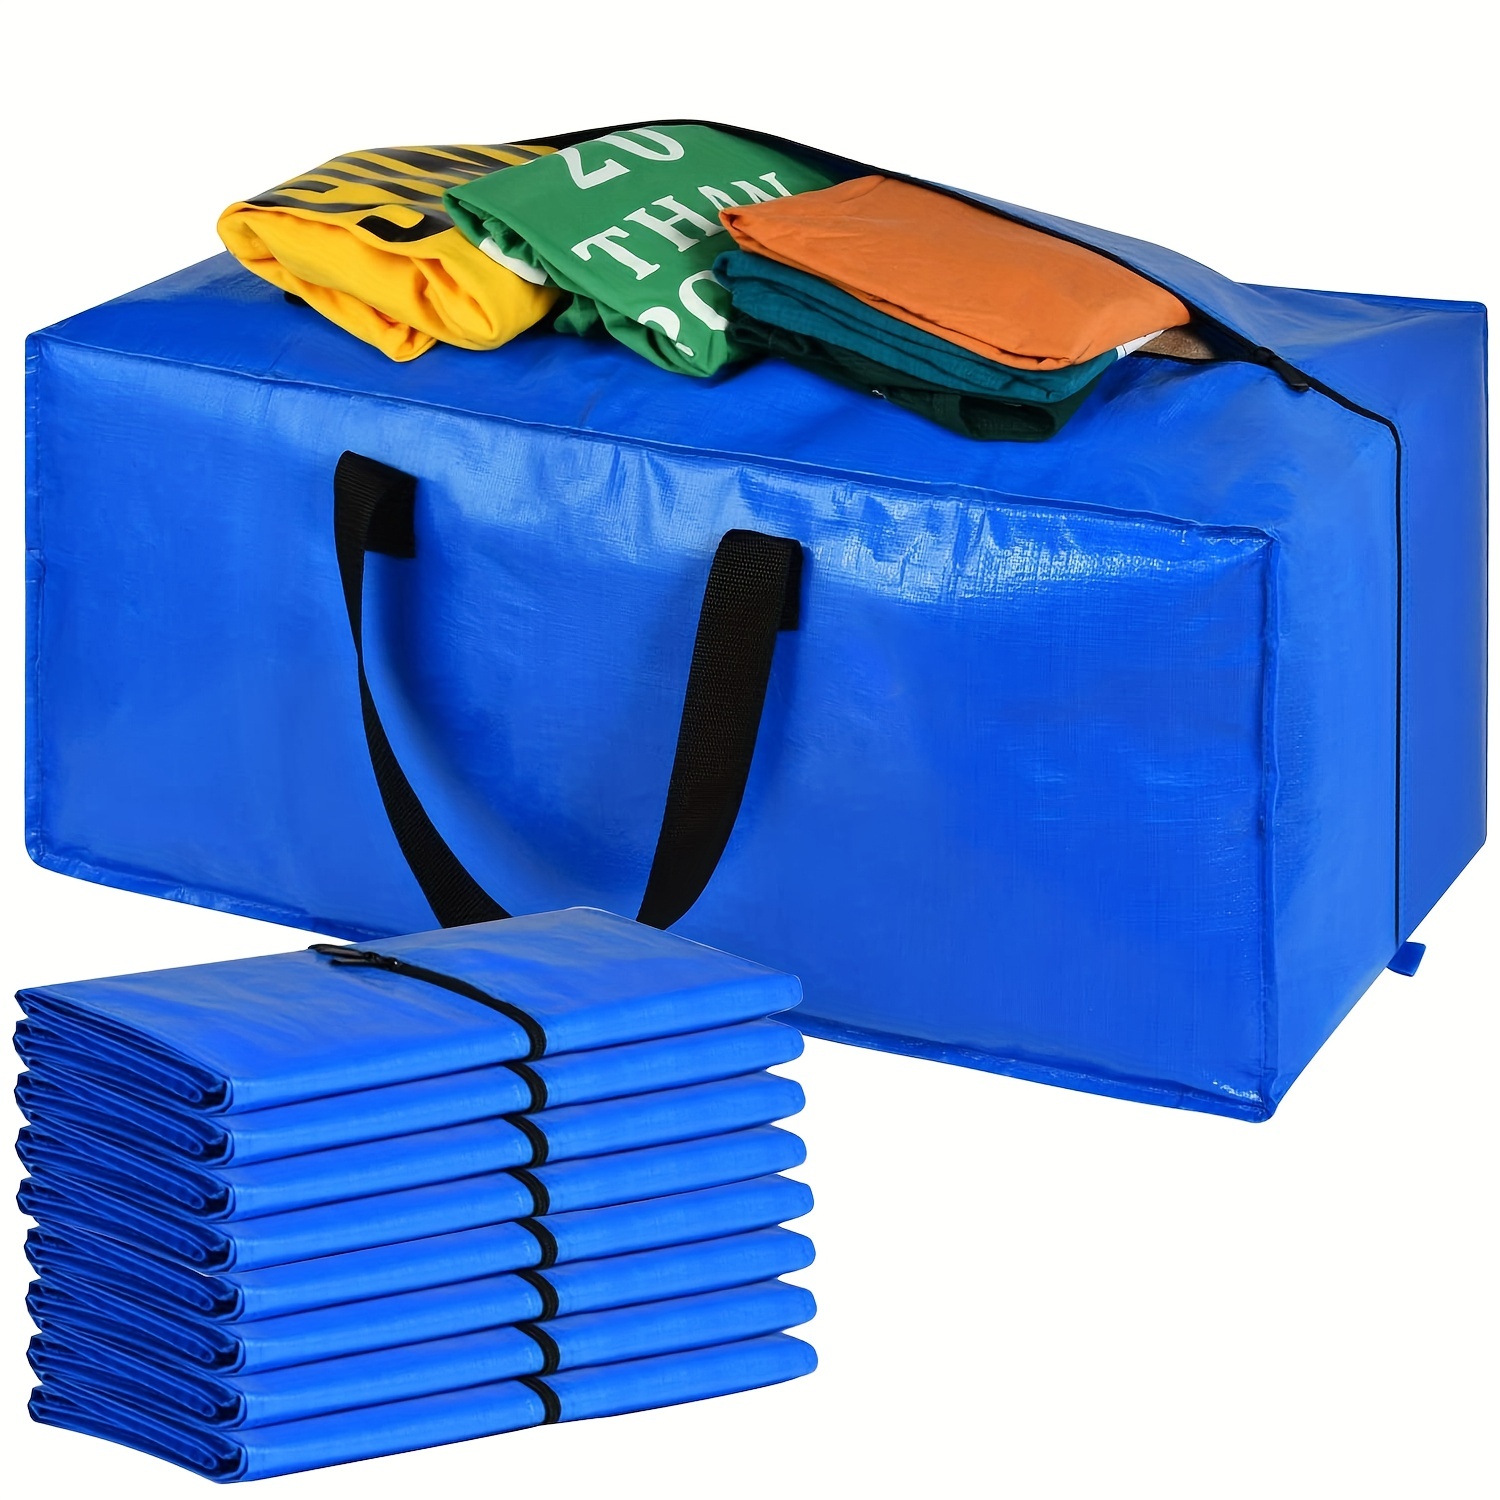 Moving Boxes Heavy Duty Extra Large Storage, Blue Plastic